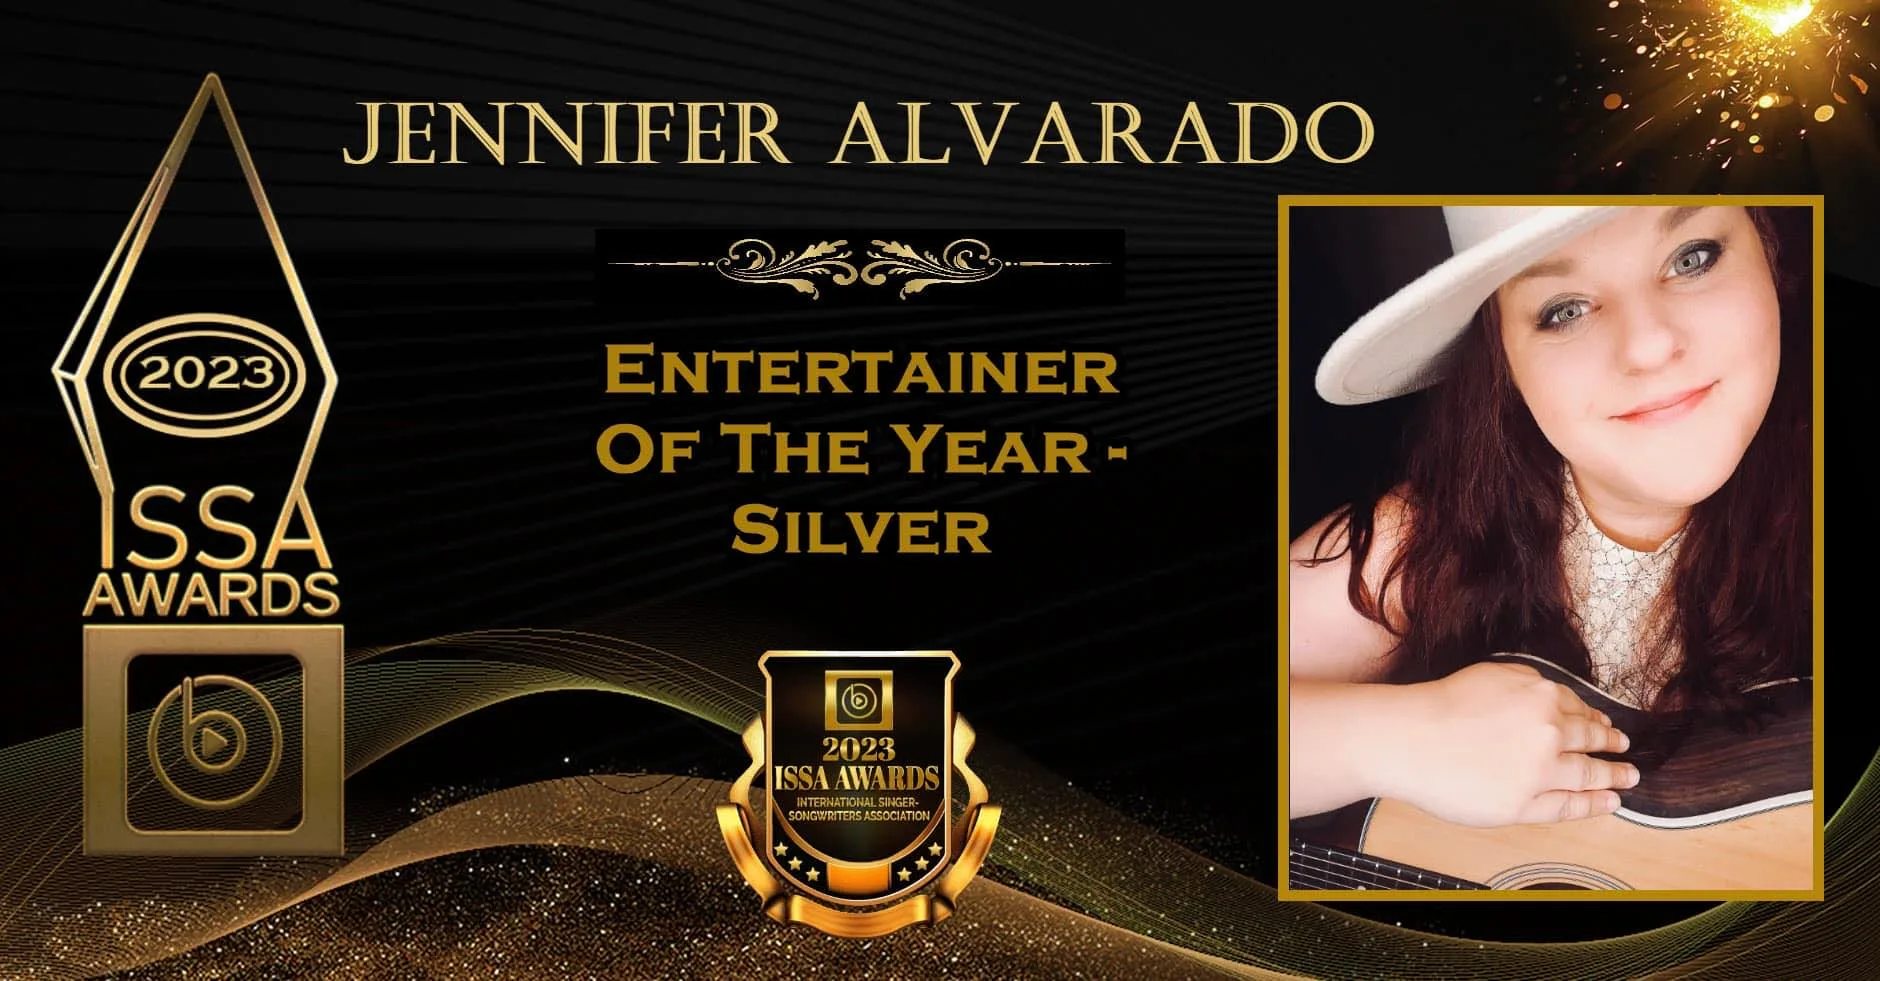 Promotional image of musician Jennifer Alvarado